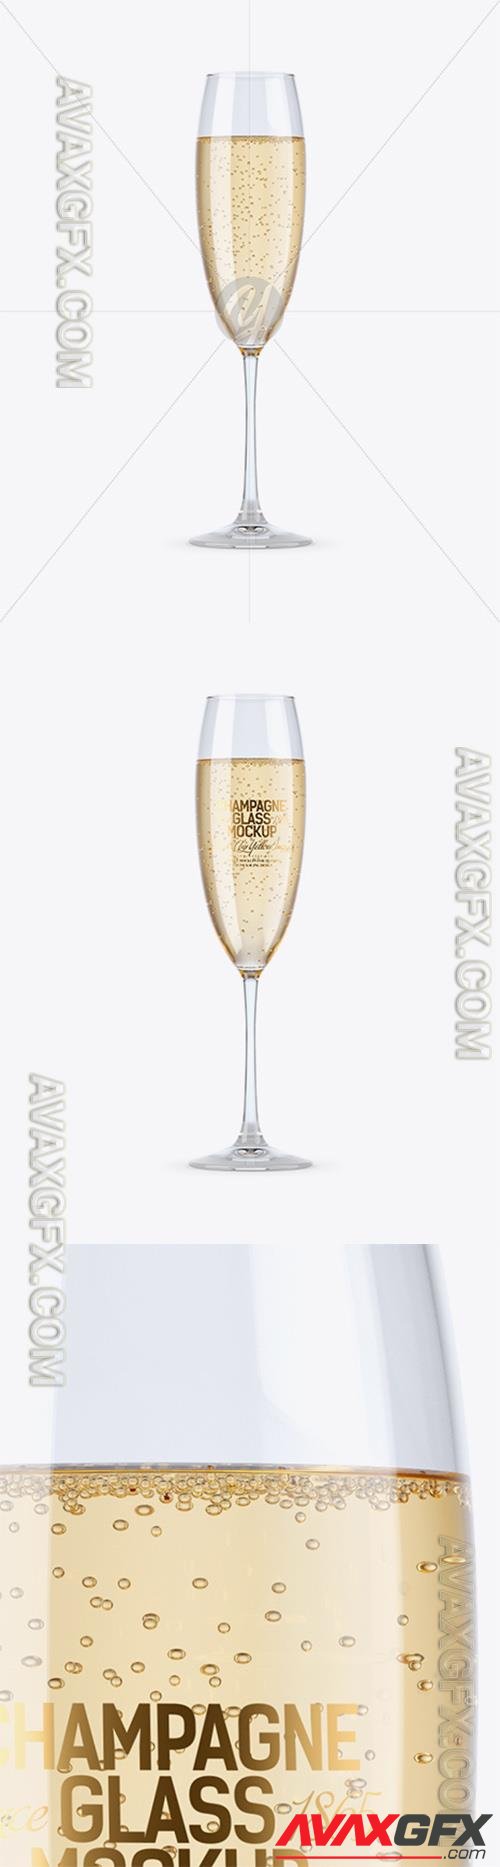 Champagne Glass Mockup 27077 TIF